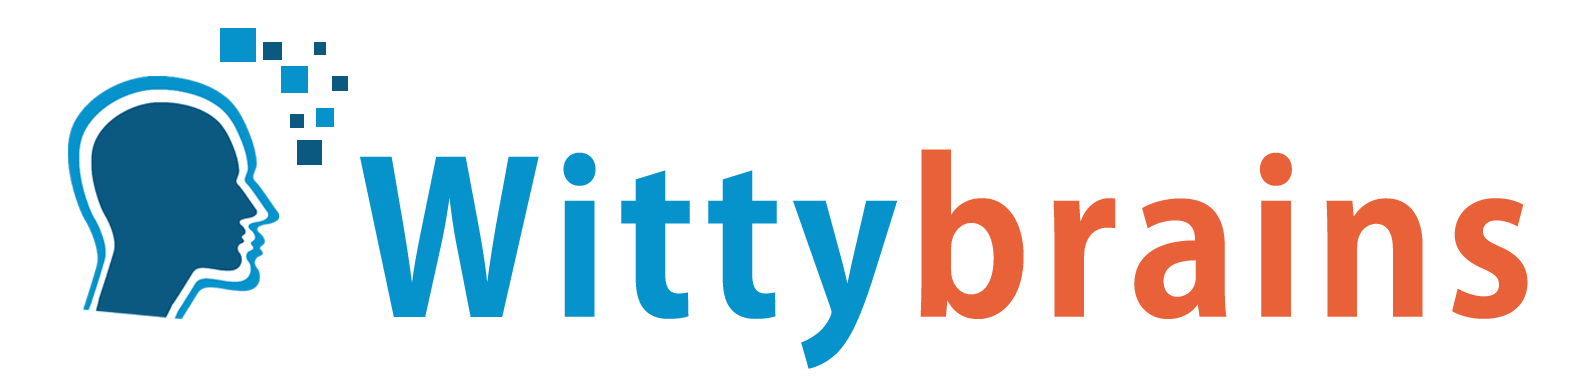 Wittybrains logo